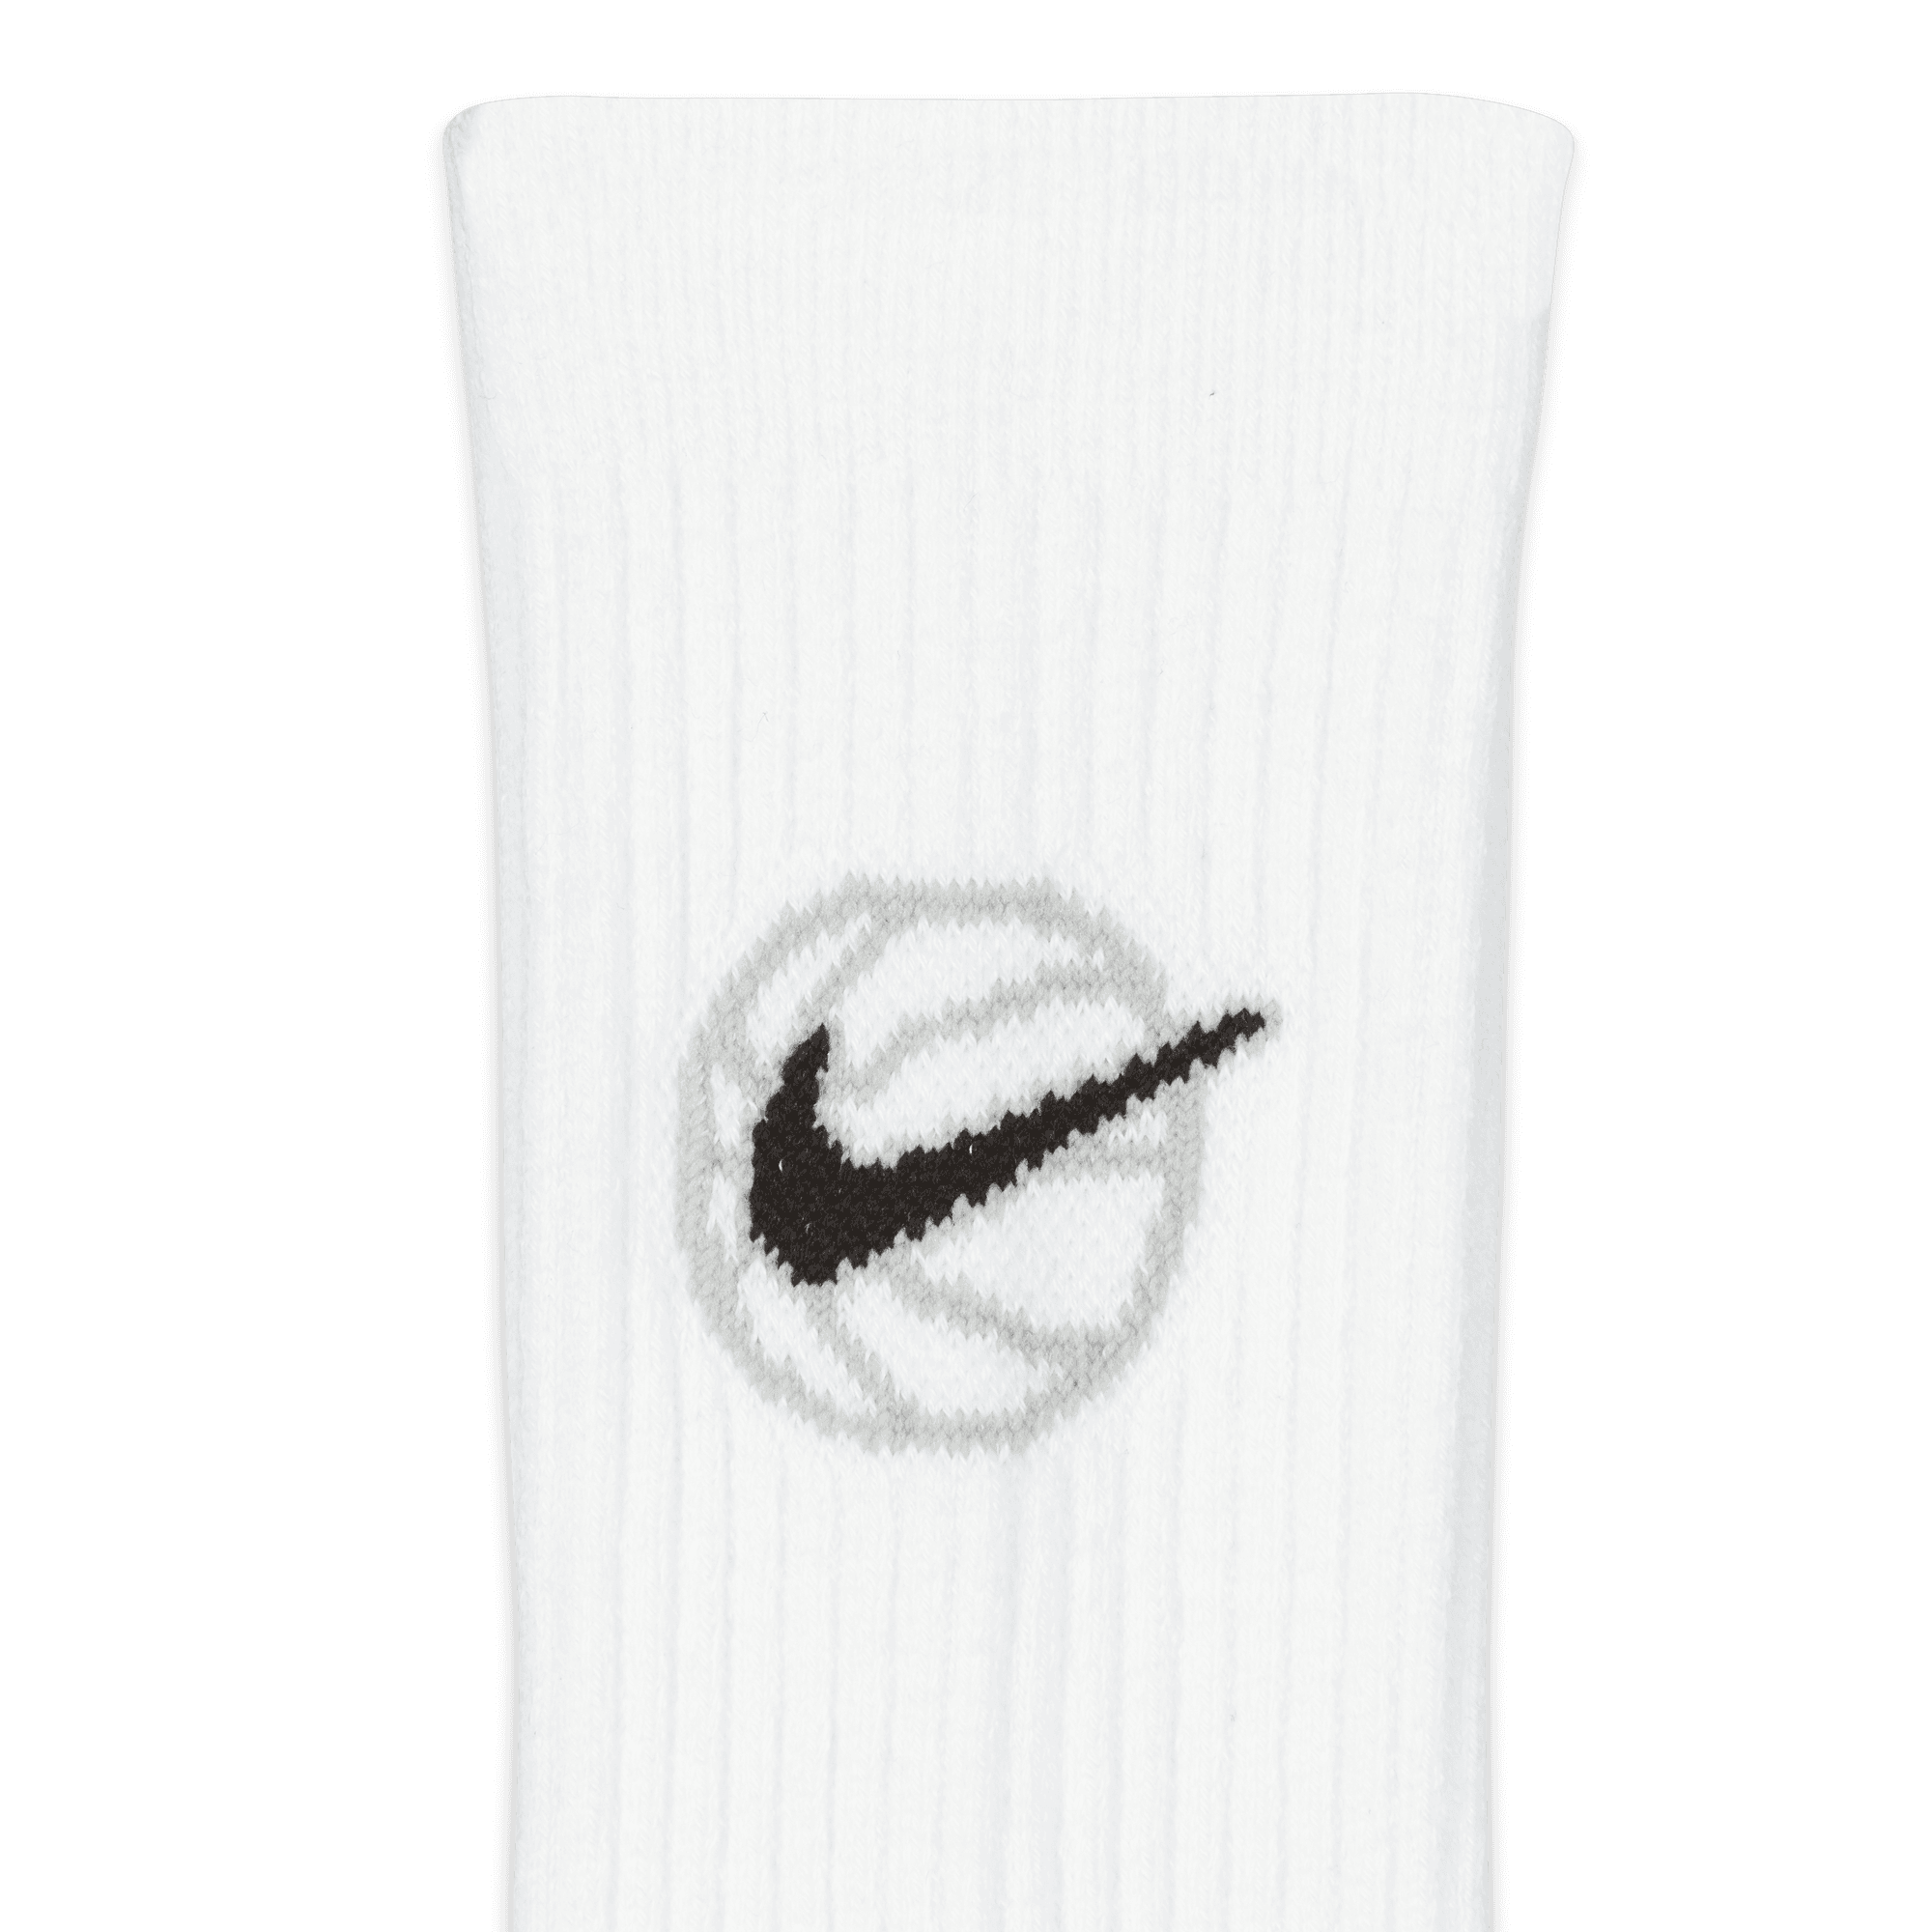 Nike Everyday Crew Basketball Socks (3 Pair) 